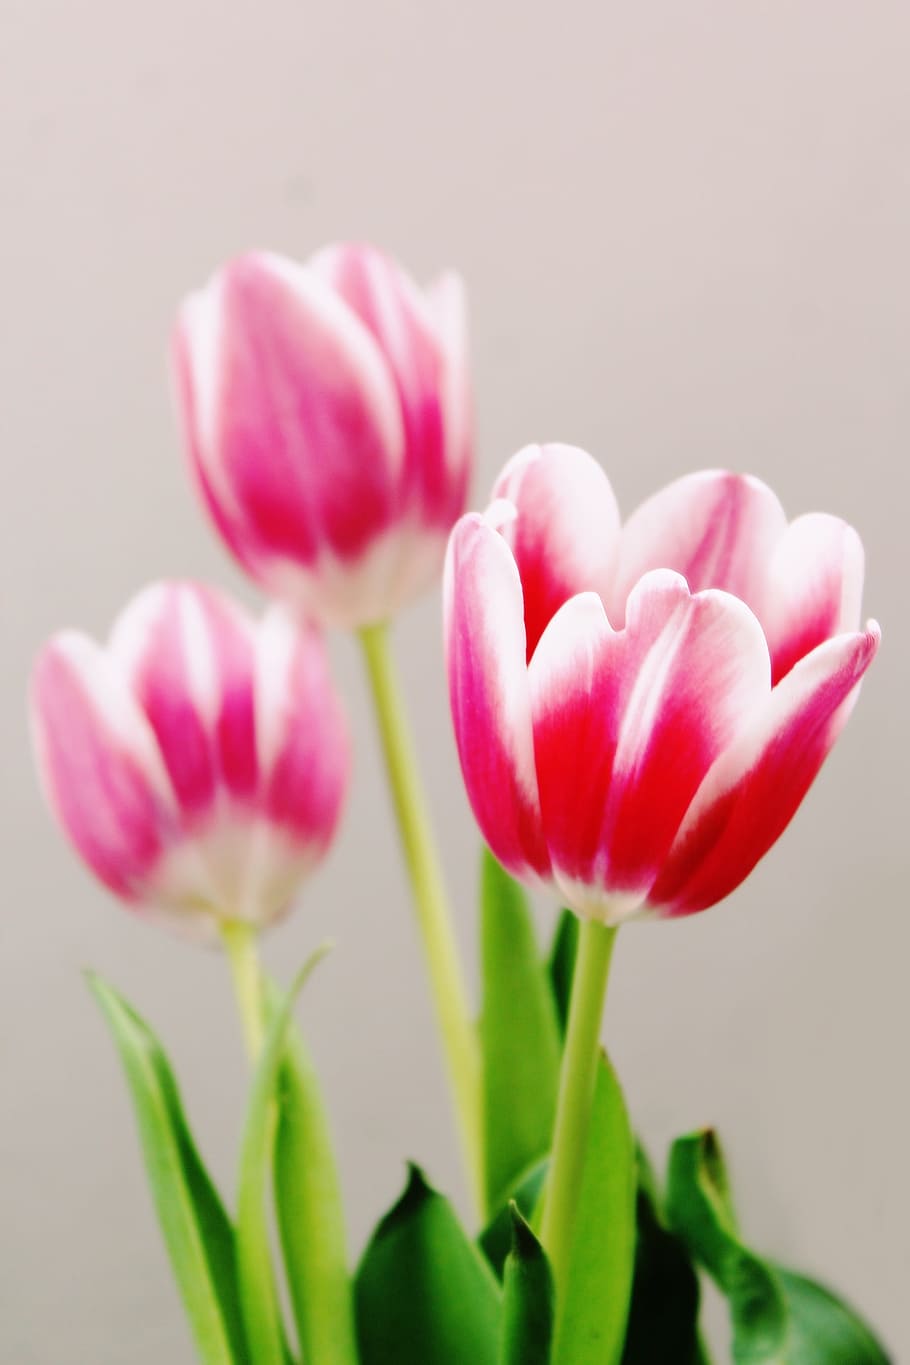 three, pink-and-white tulip flowers, pink, white tulip, flowers, tulips, flora, red, bloom, schnittblume